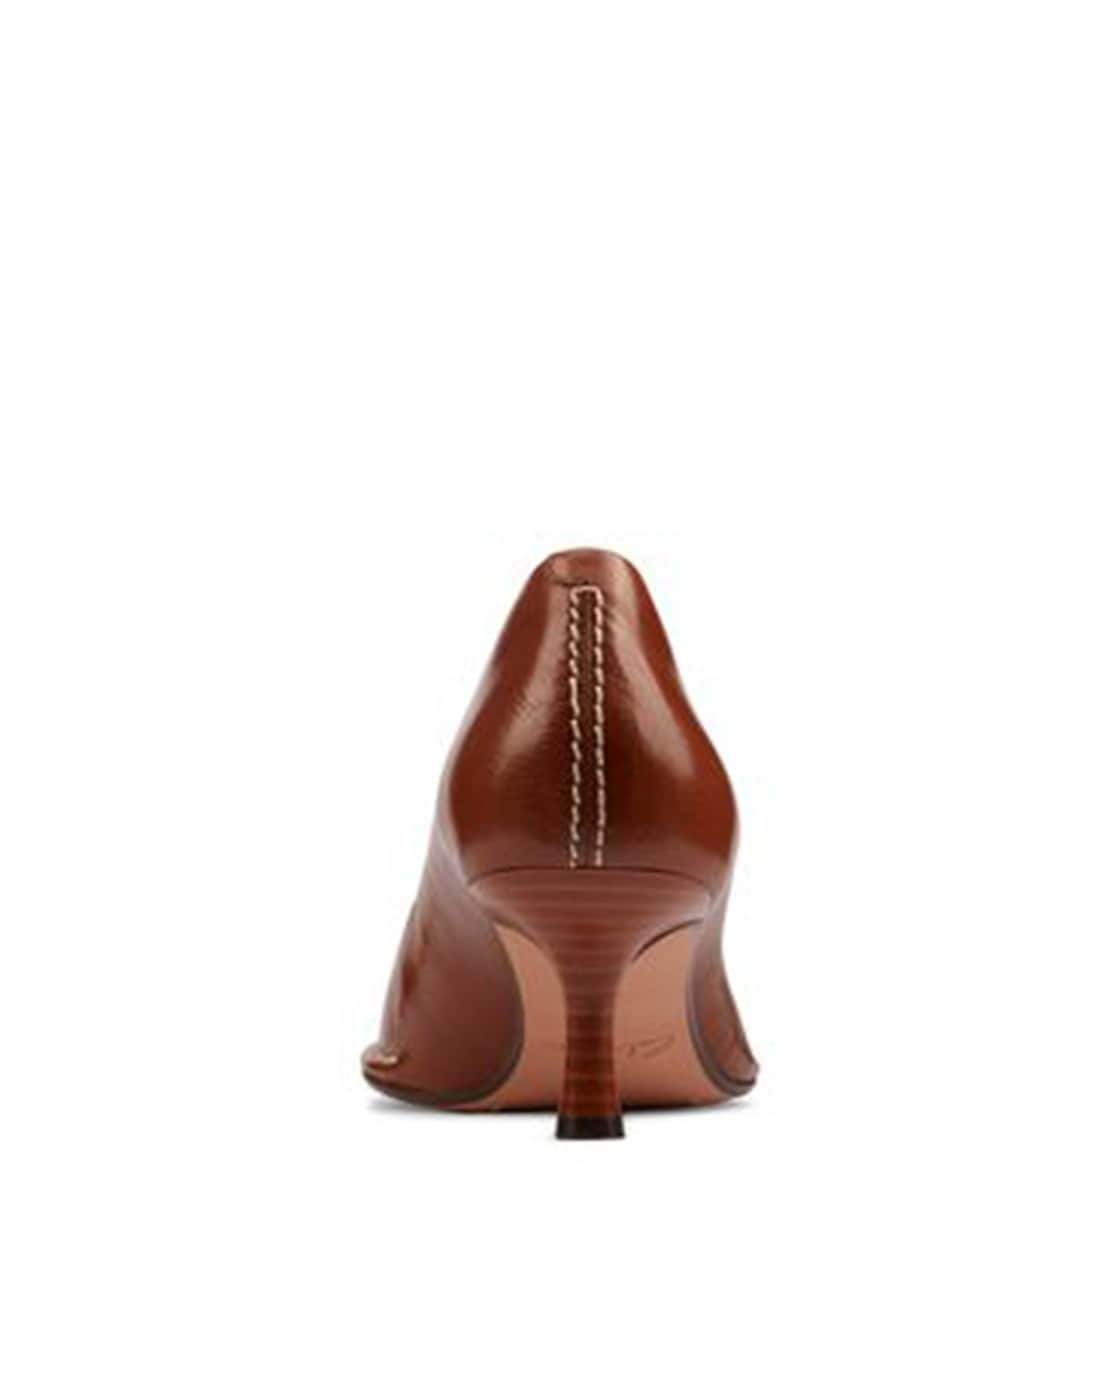 Saint.G Women's Ankle-Strap Brown Leather Printed Heels (Black, 3 UK) :  Amazon.in: Shoes & Handbags